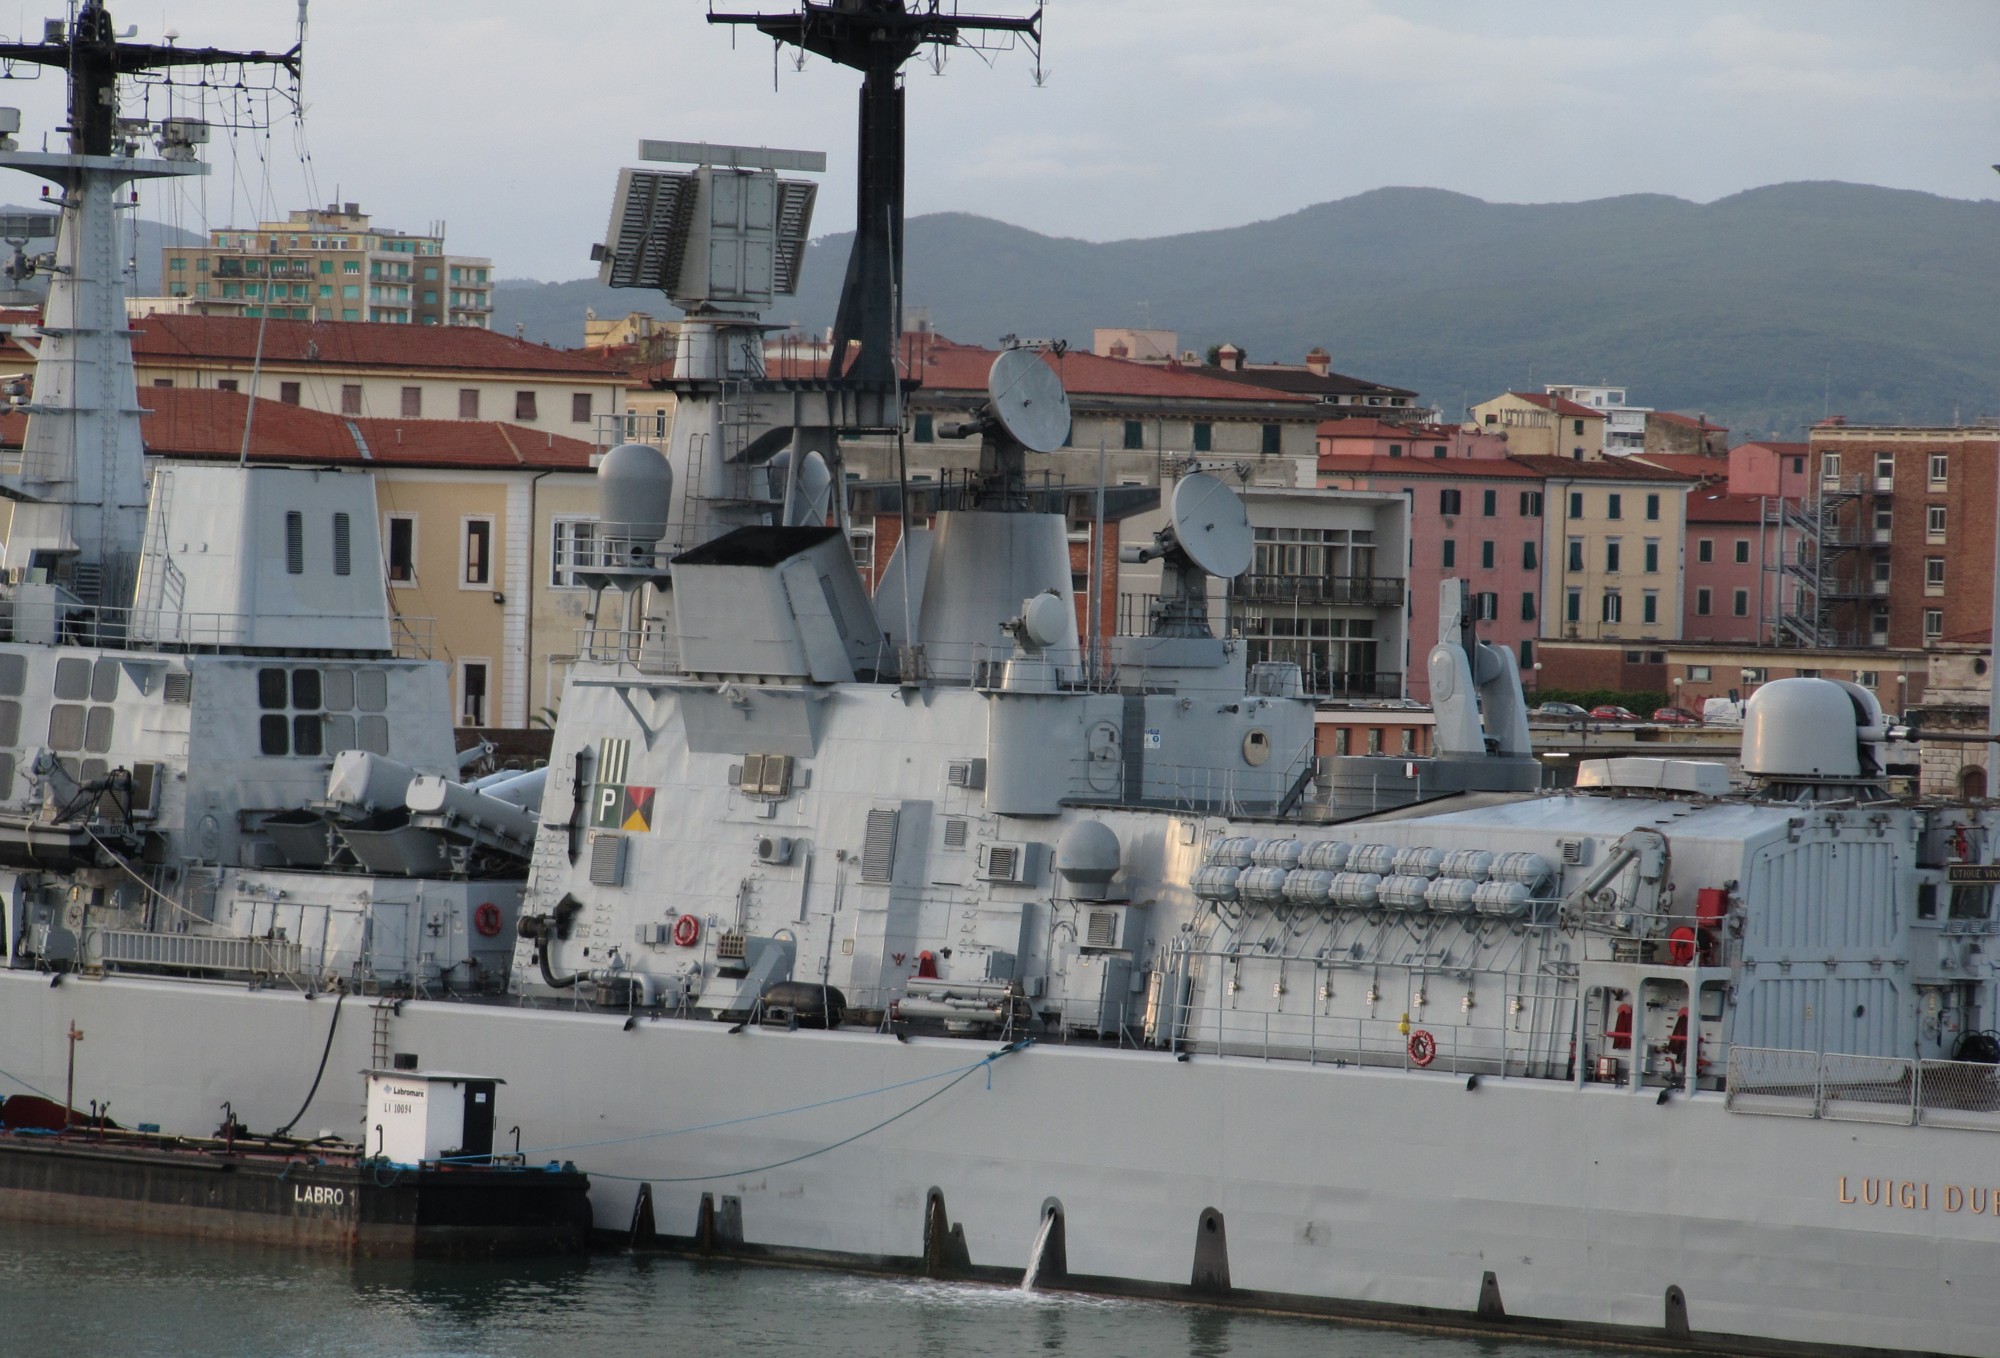 d-560 luigi durand de la penne its nave guided missile destroyer ddg italian navy marina militare 69